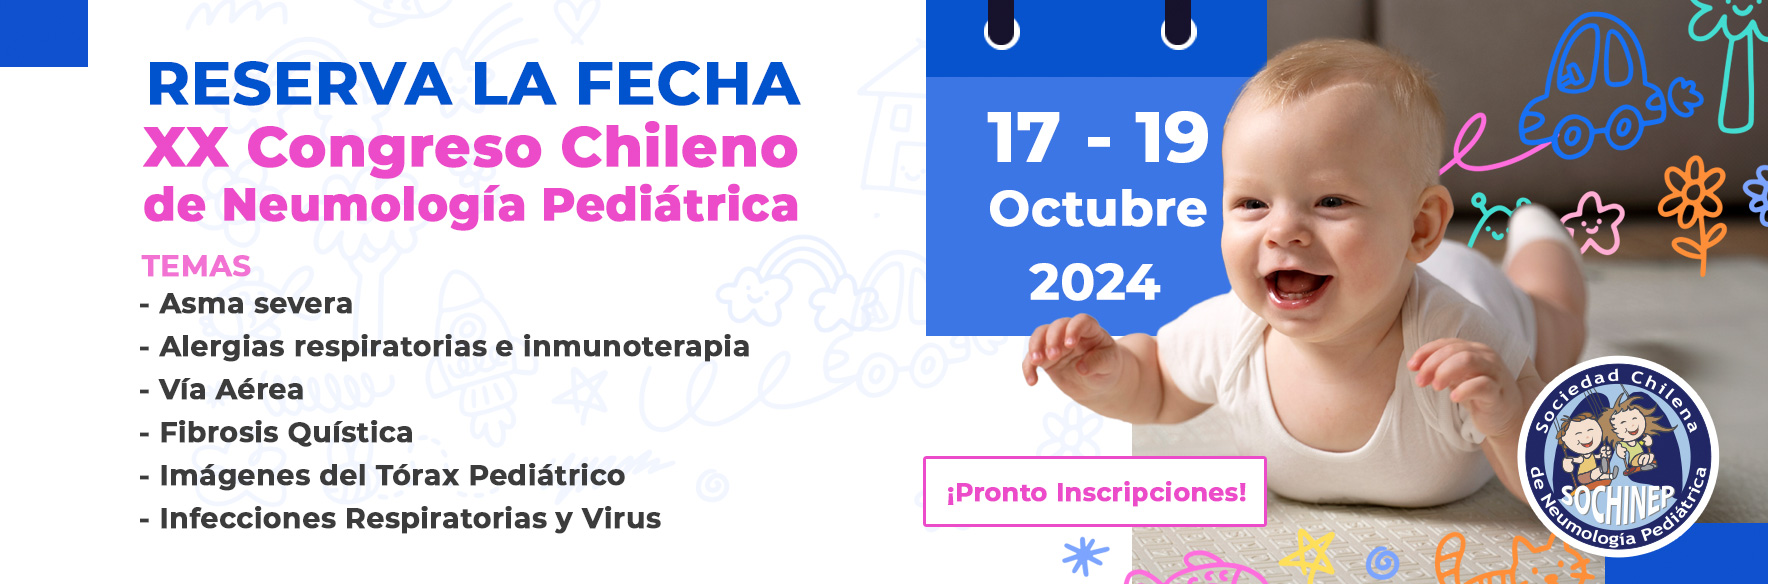 XX Congreso Chileno de Neumología Pediátrica